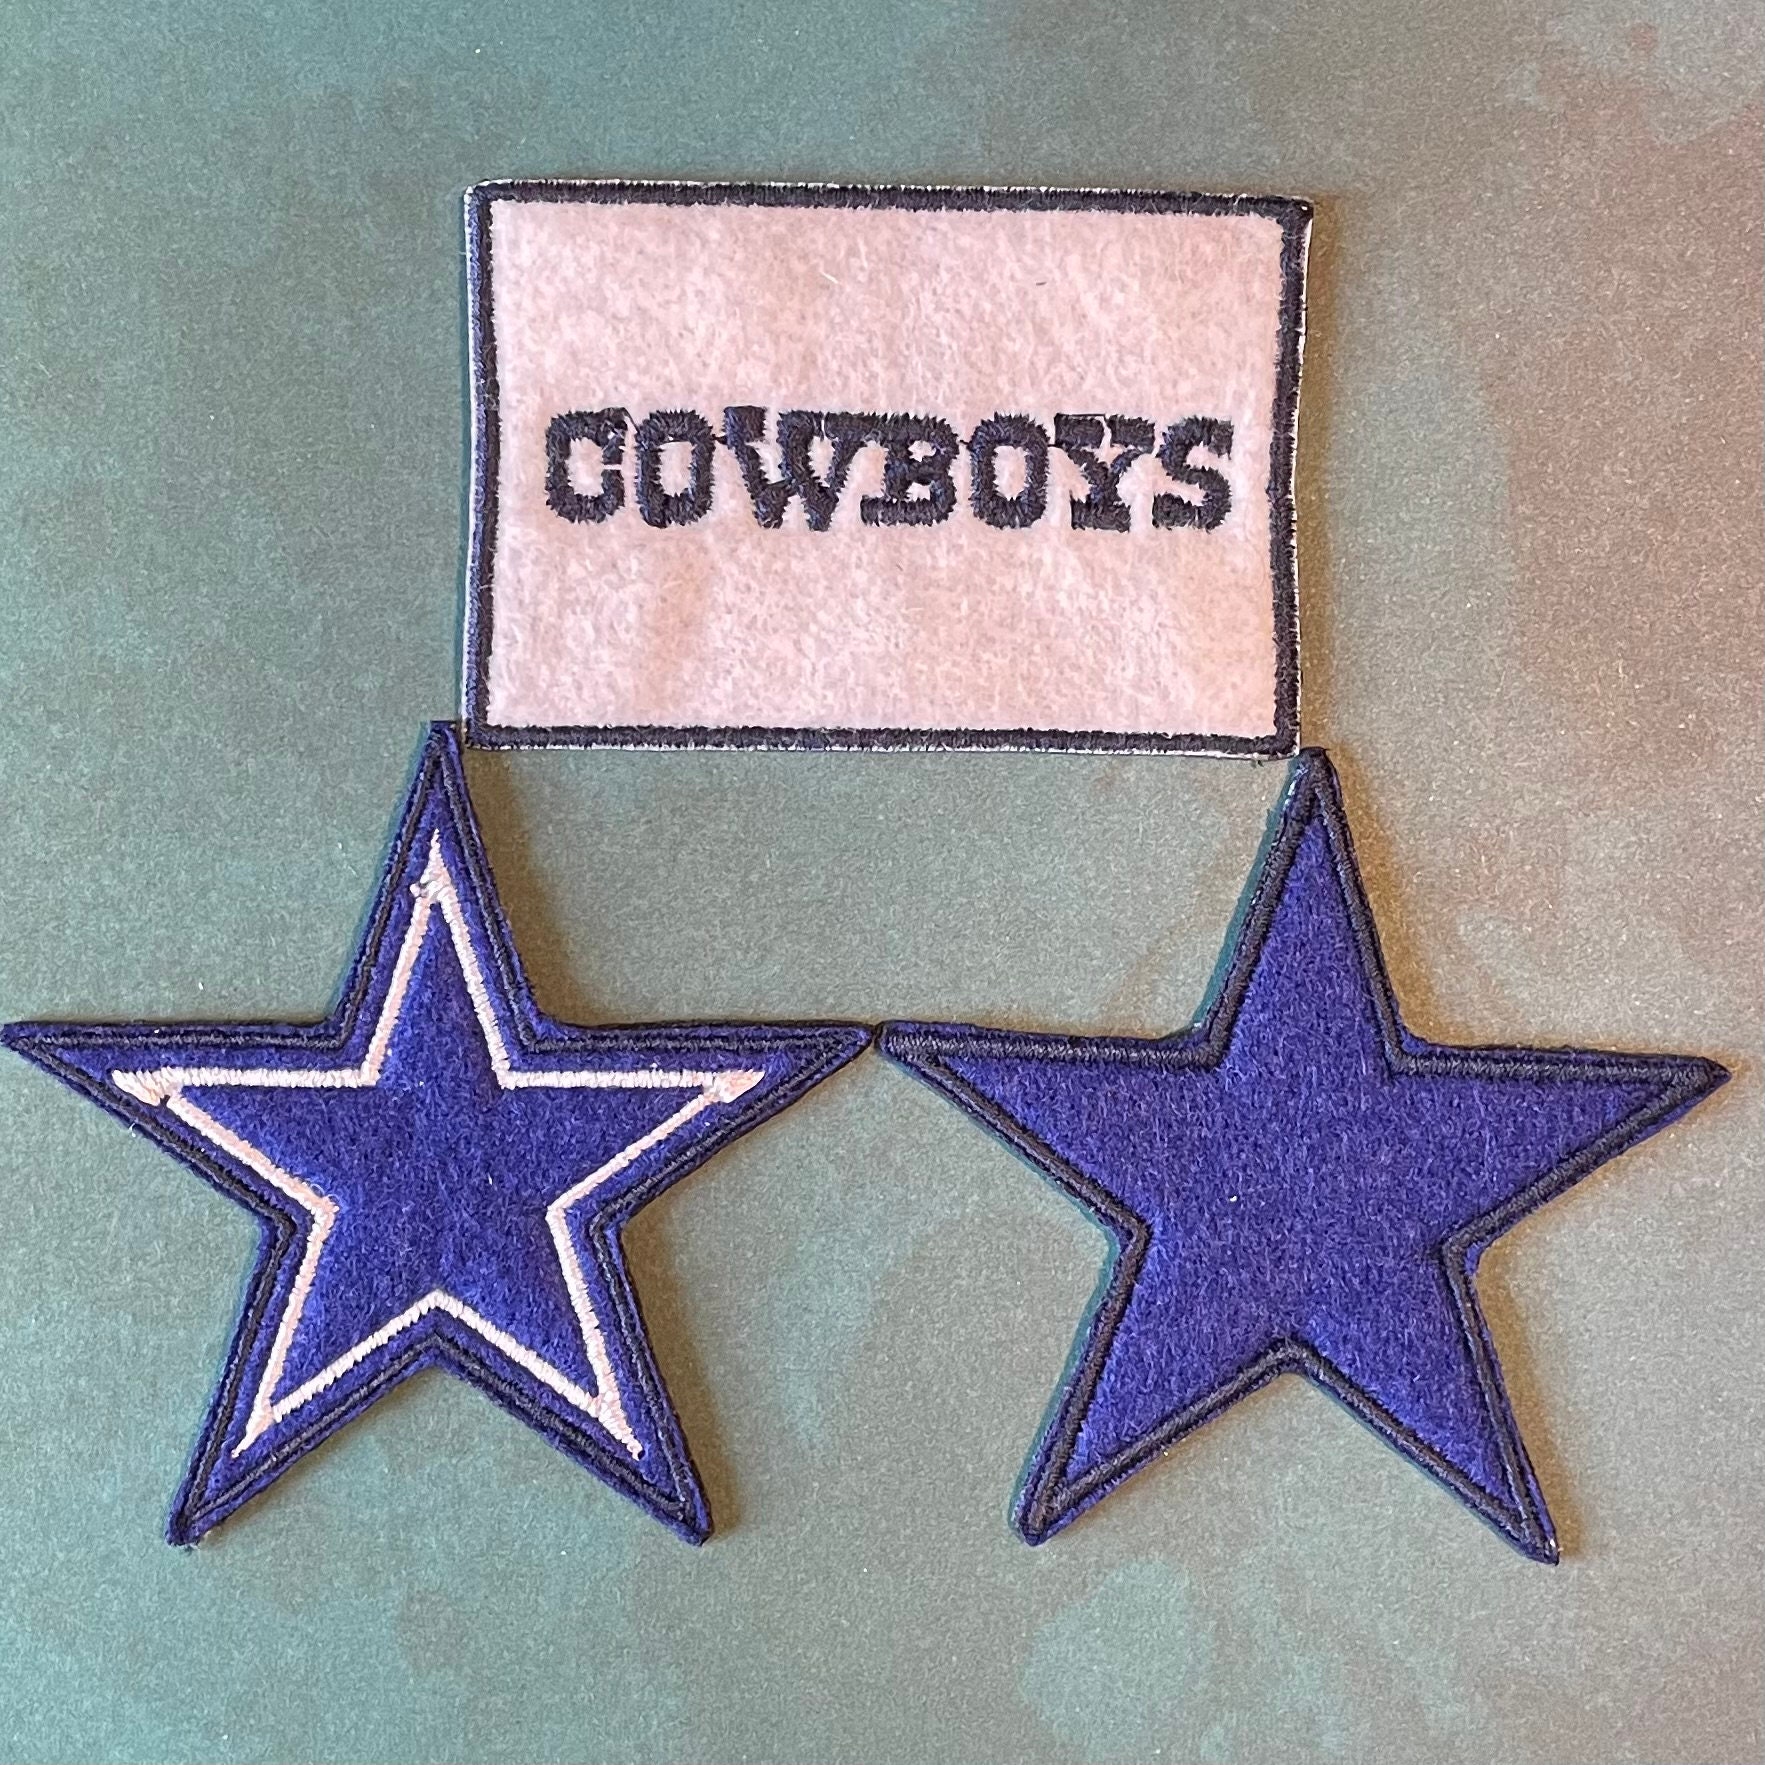 Dallas Cowboys Iron on Patch - I'm PASTA